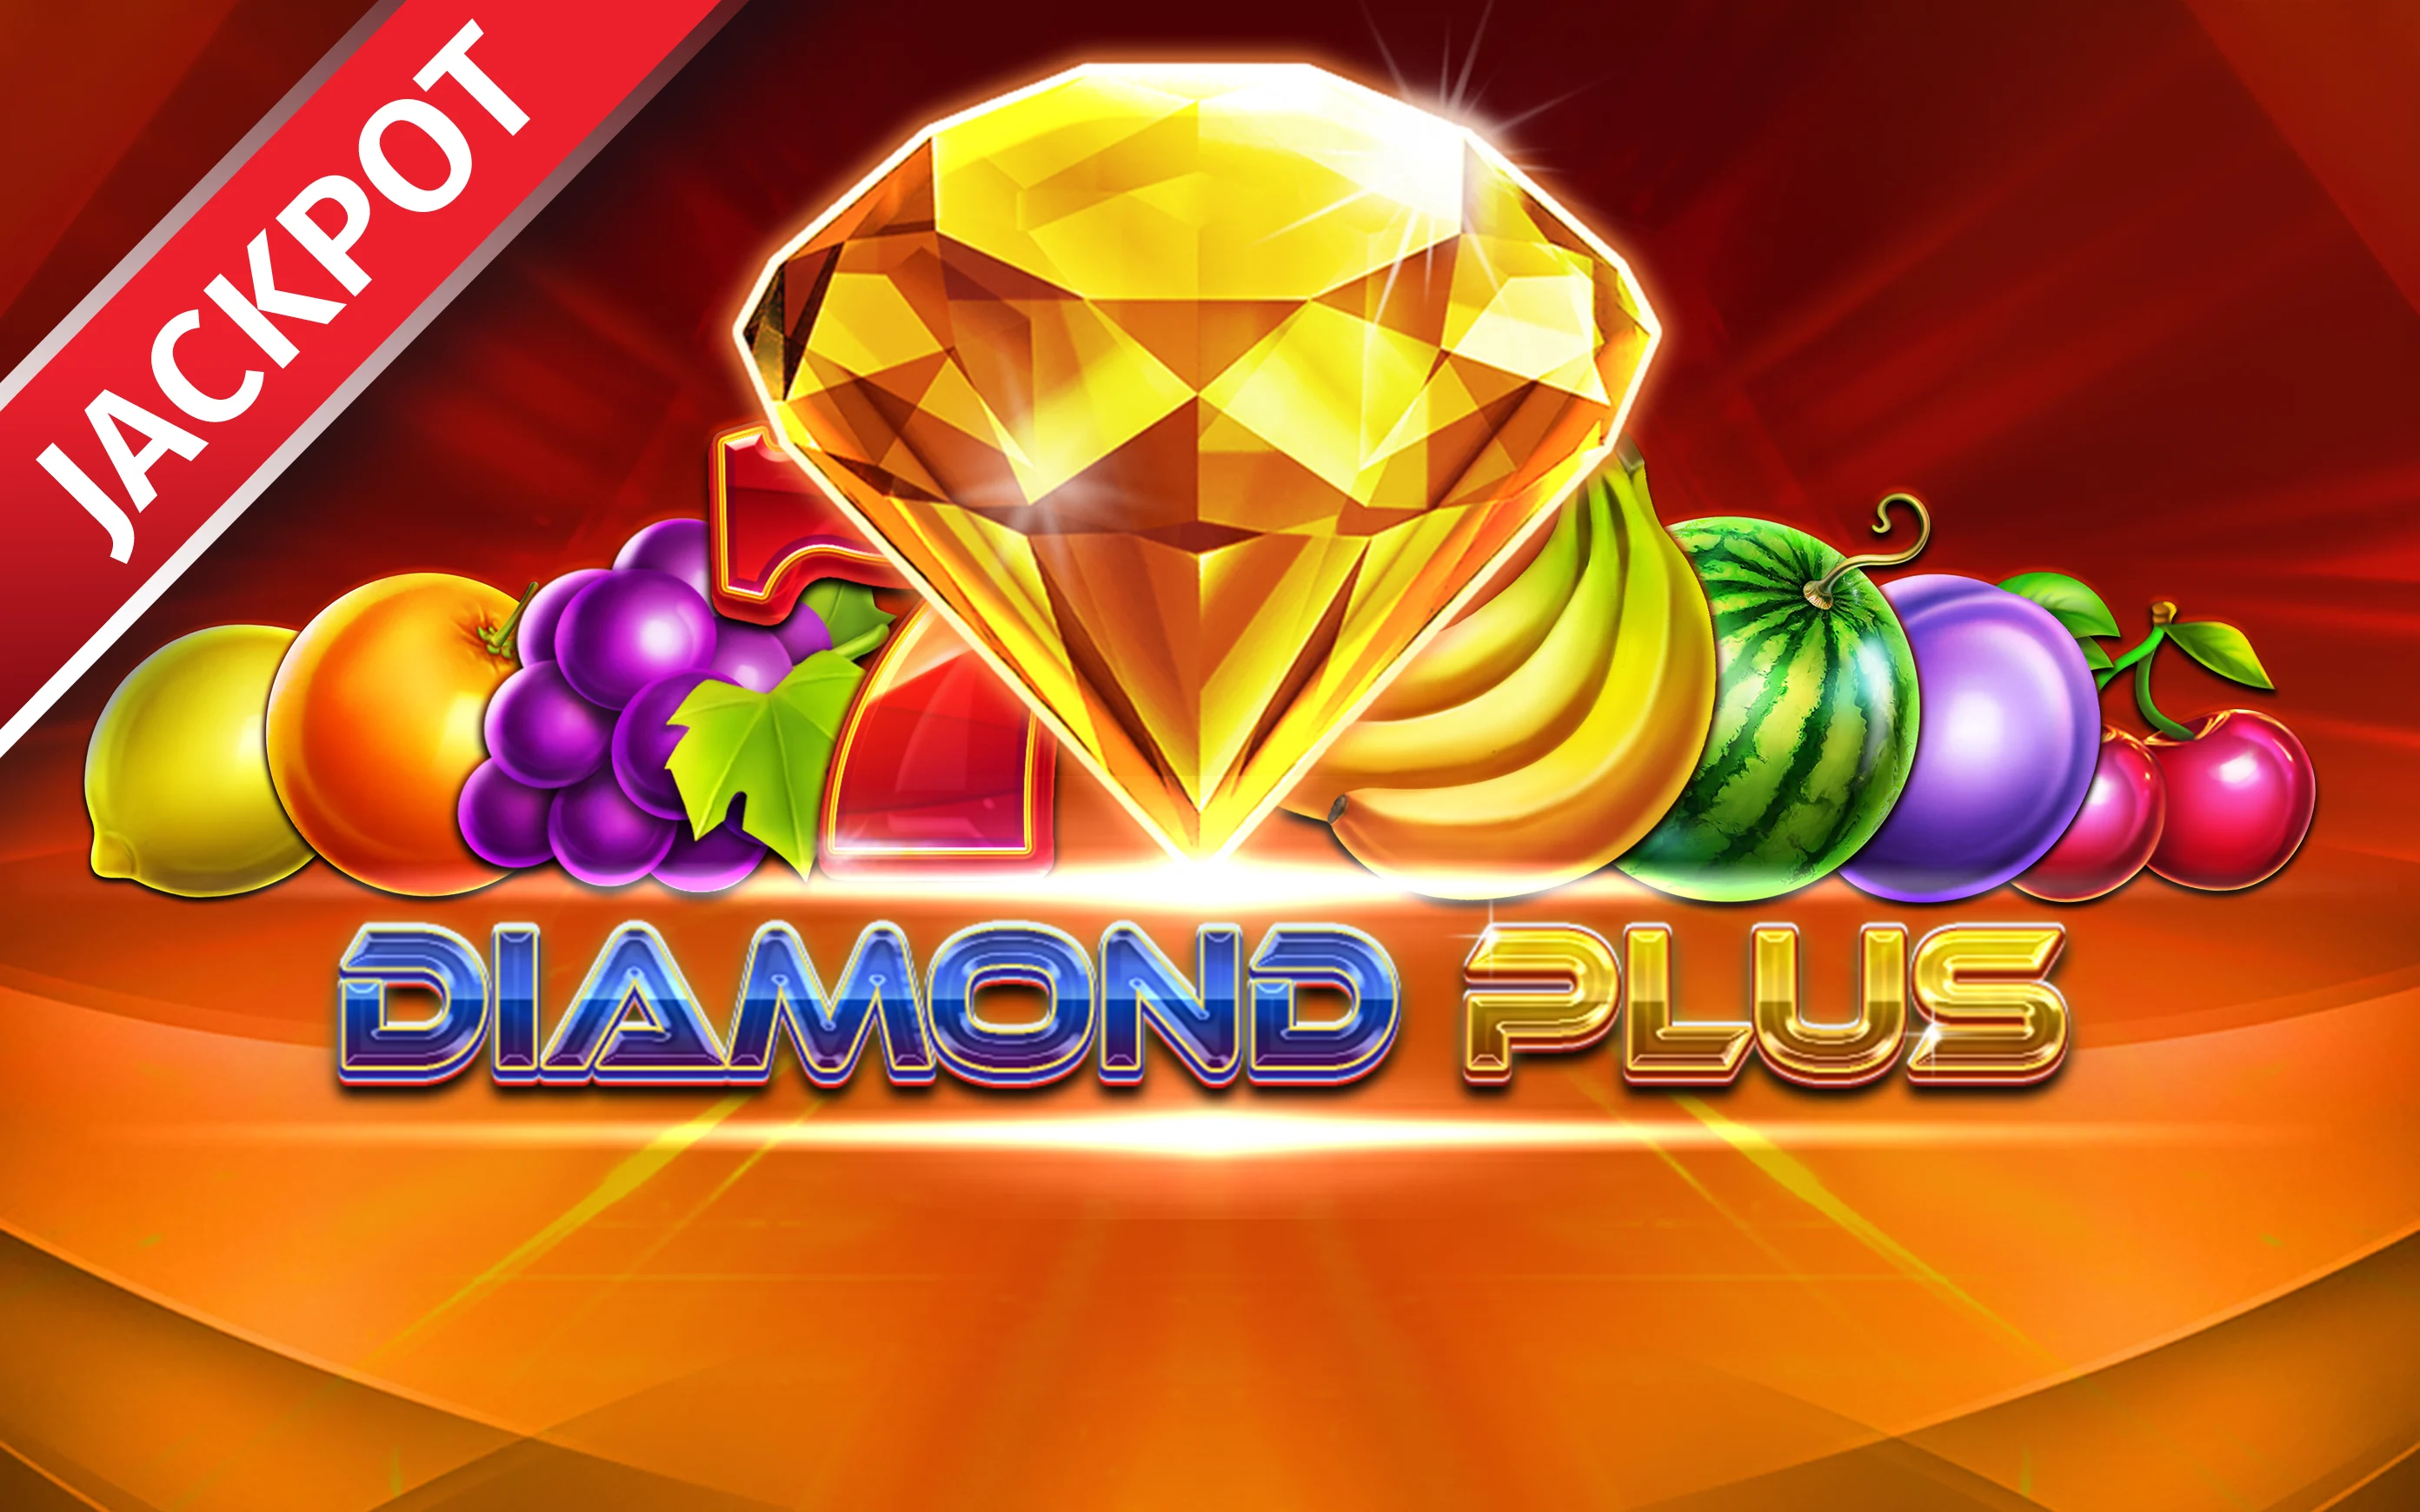 Play Diamond Plus on Starcasino.be online casino